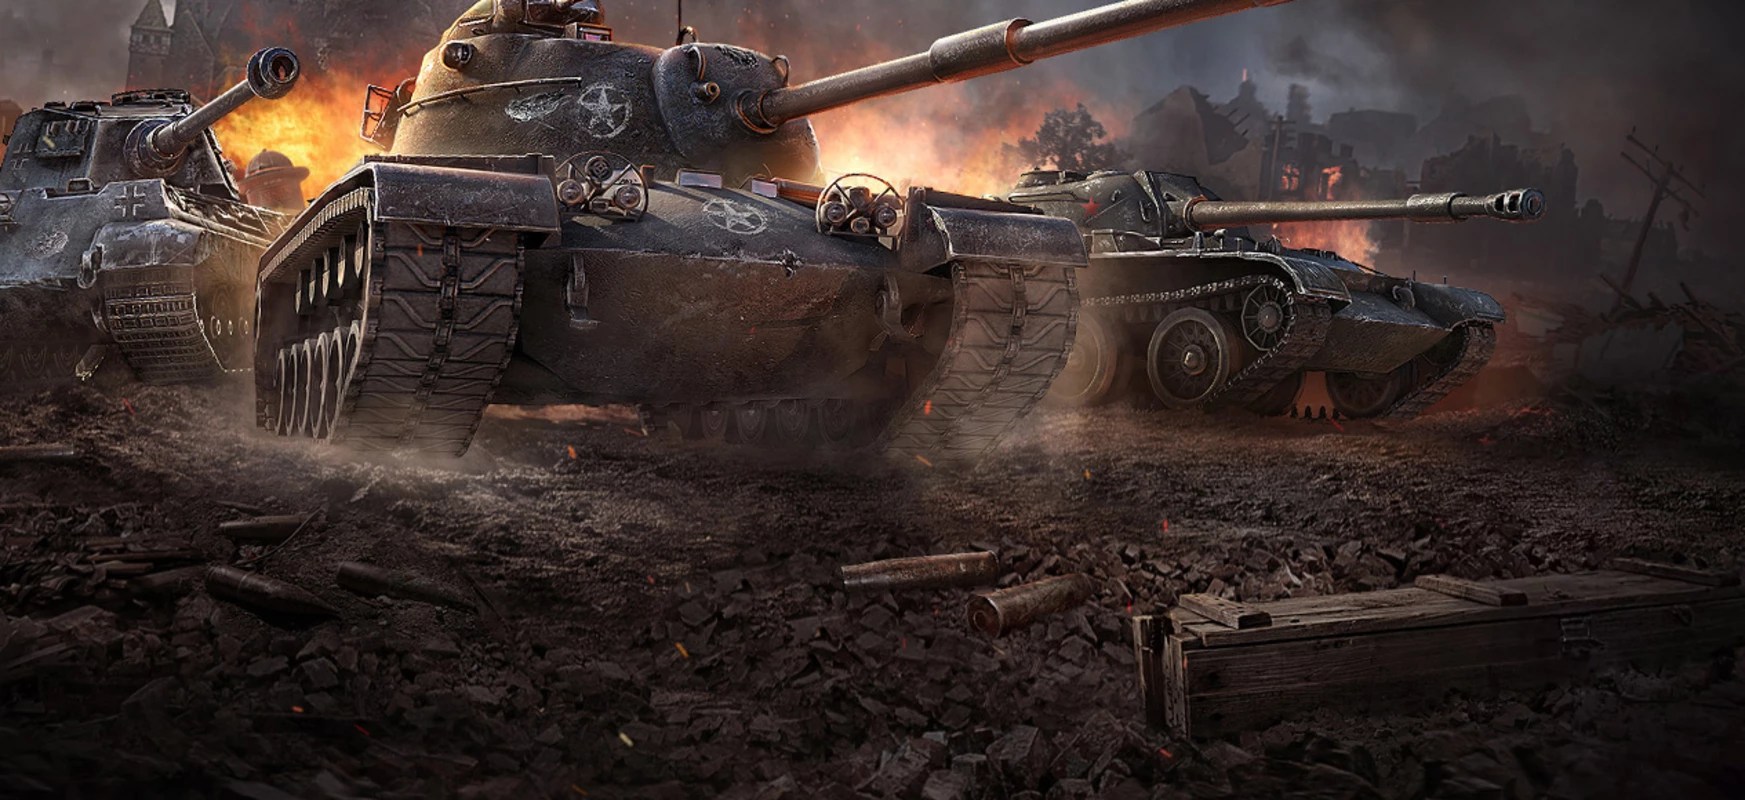 World of Tanks Blitz 3D online 10.7.0.382 APK feature